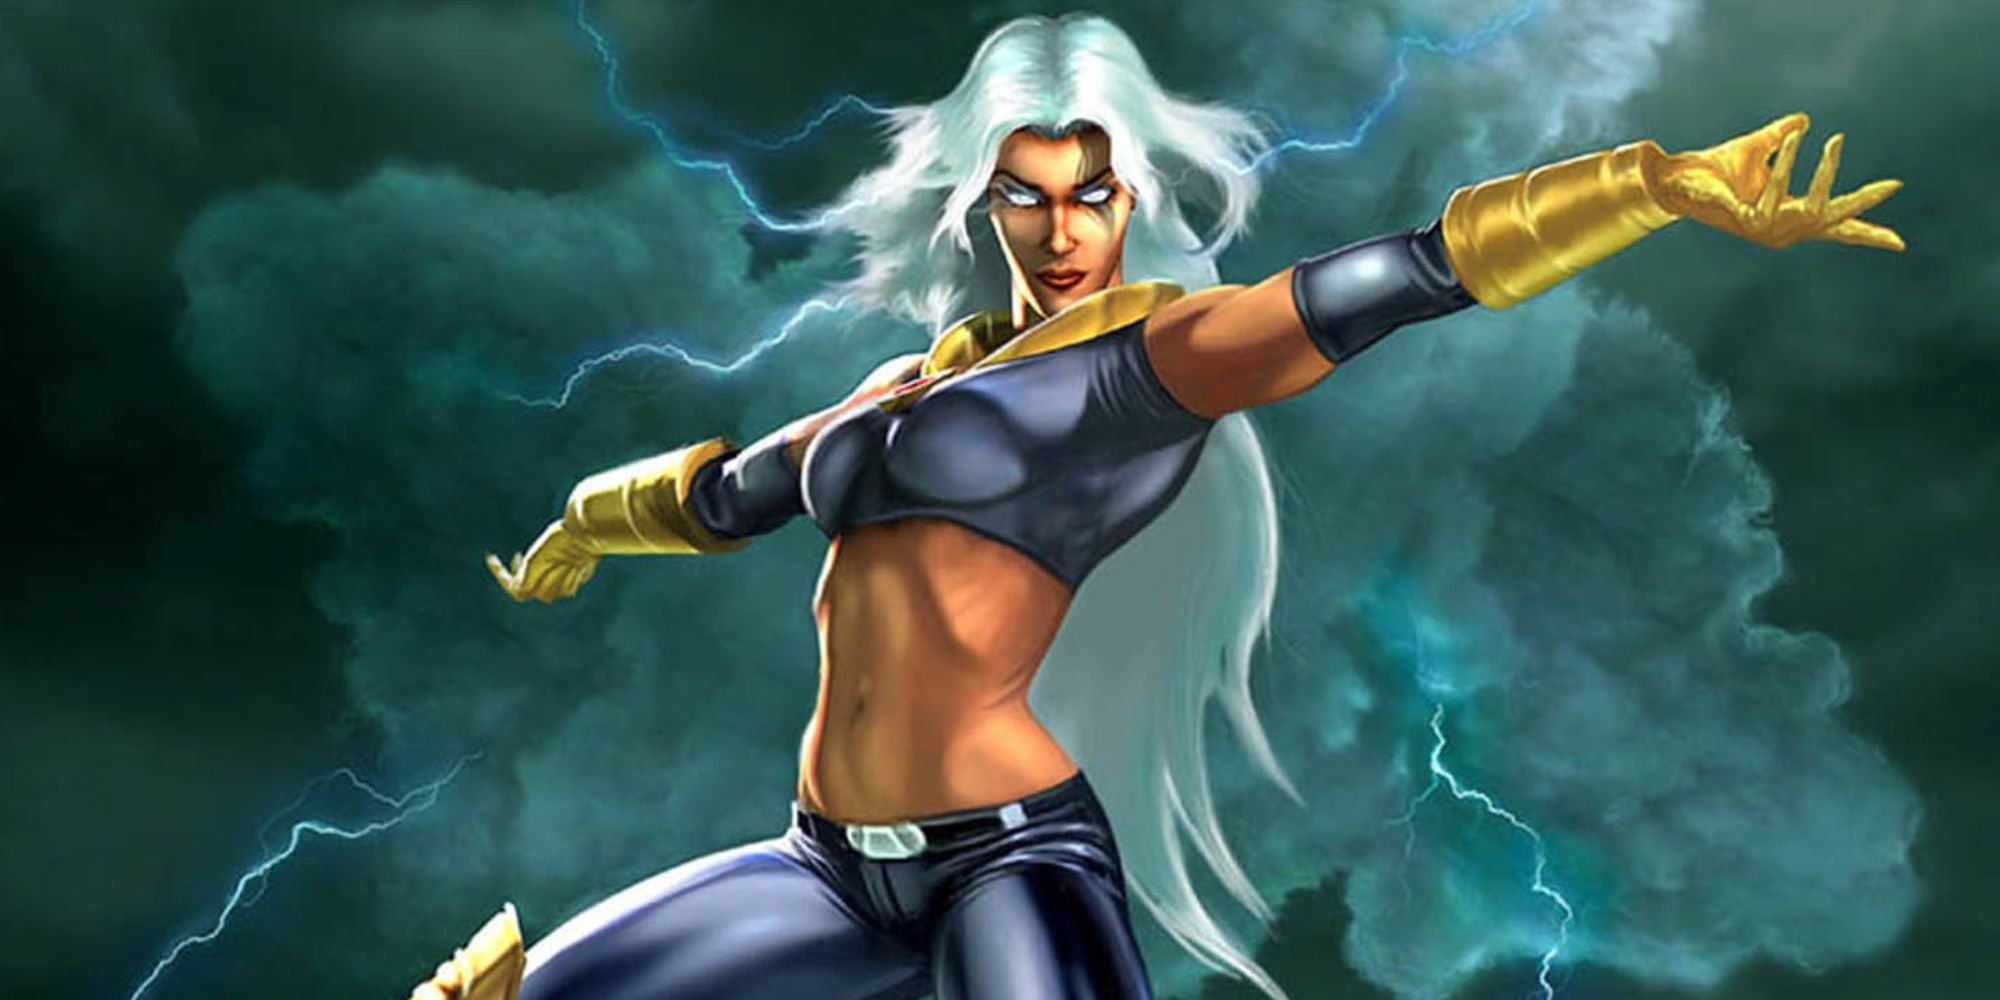 Loading screen artwork showing Storm in the sky in X-Men Legends